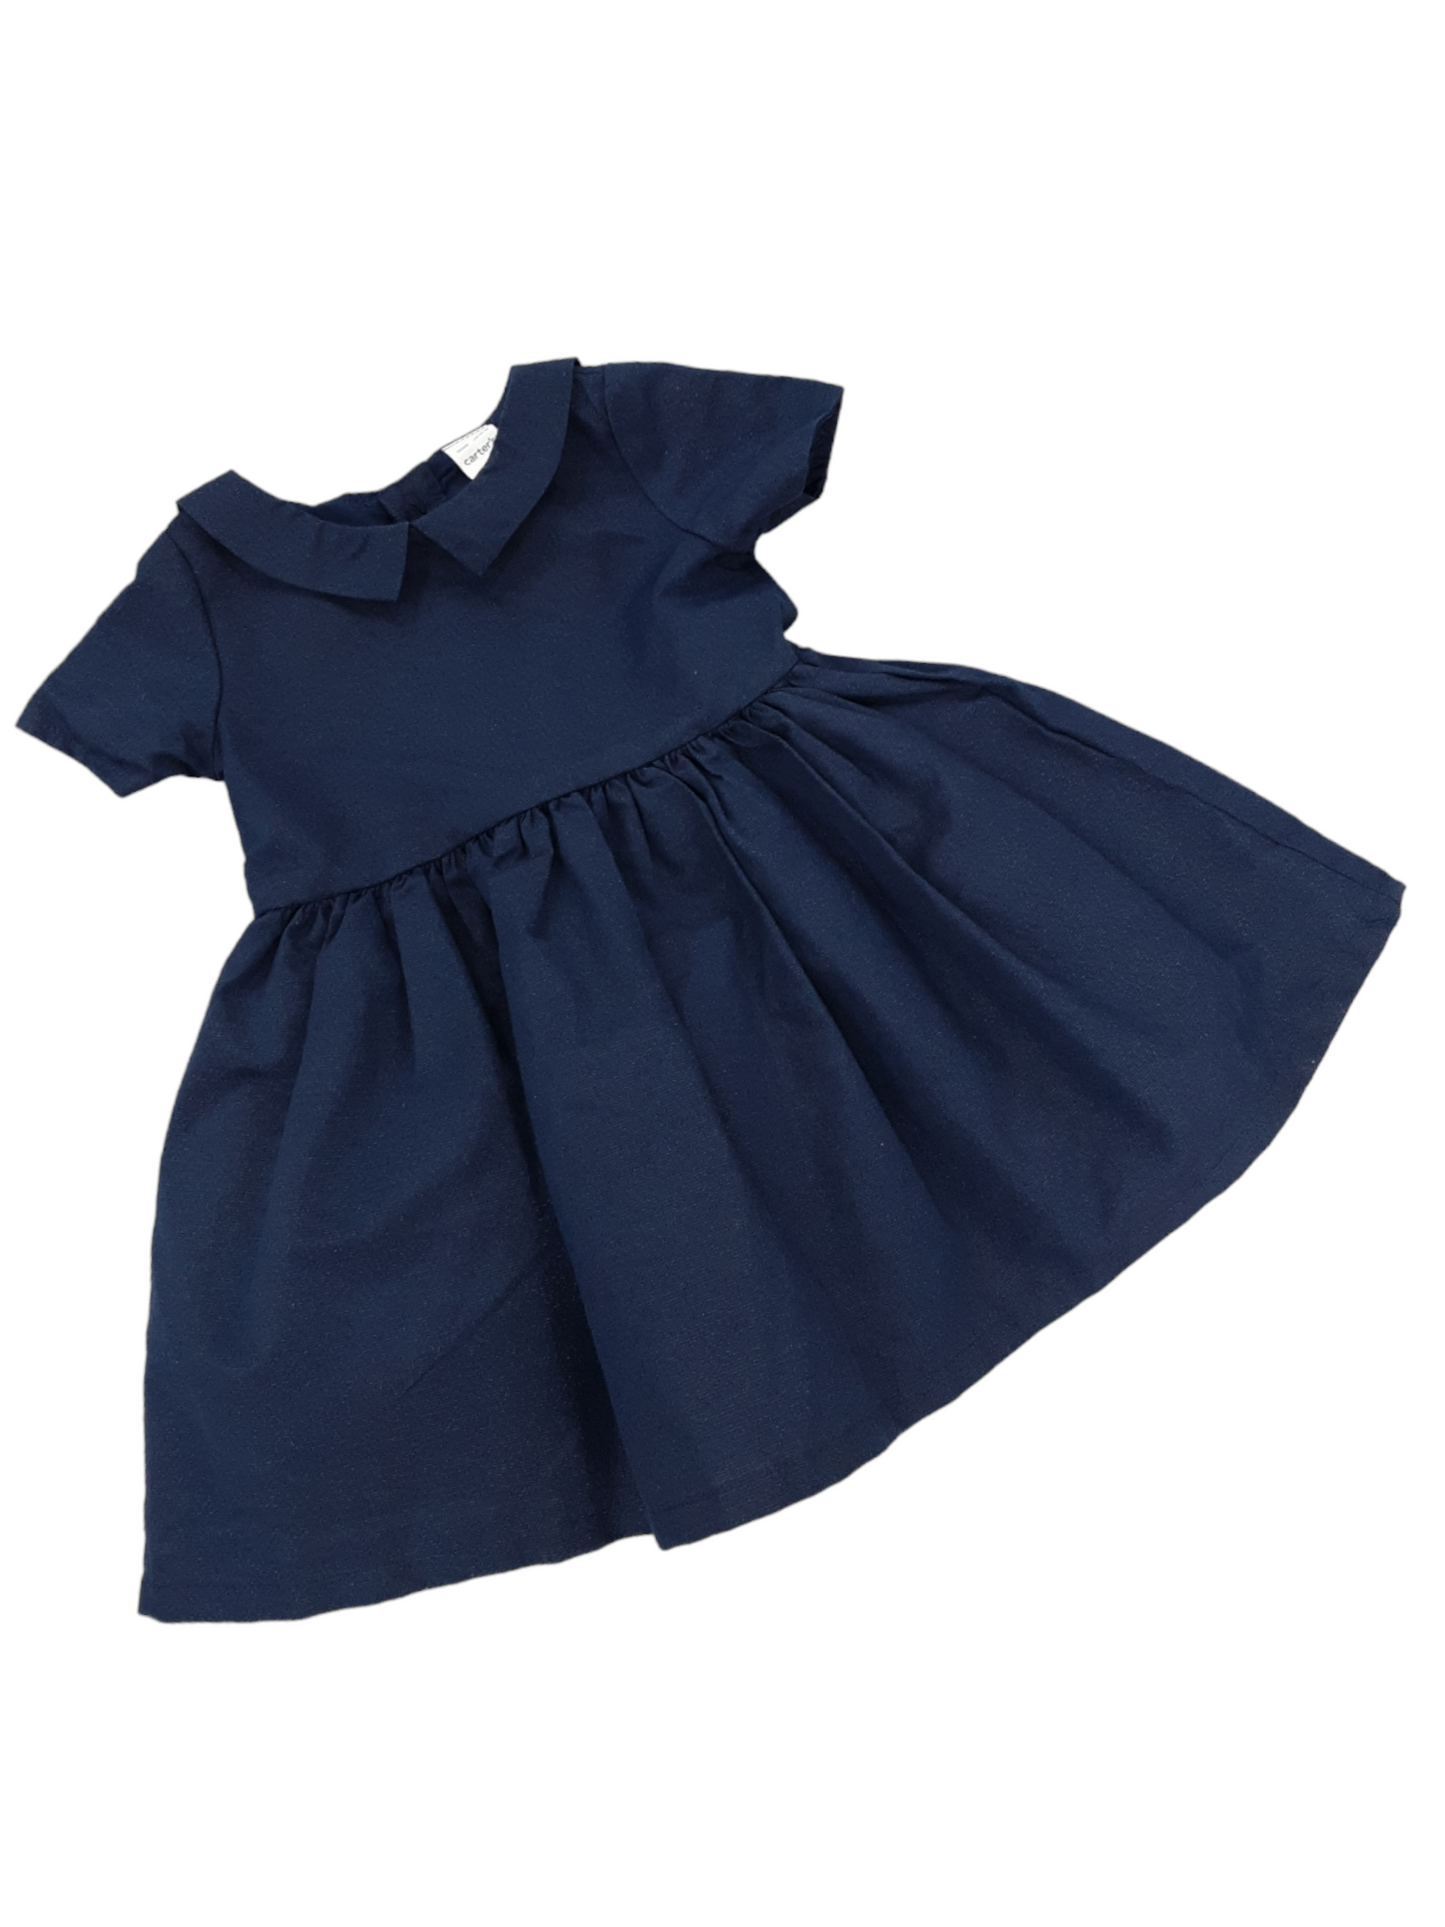 Size 9 month navy blue dress